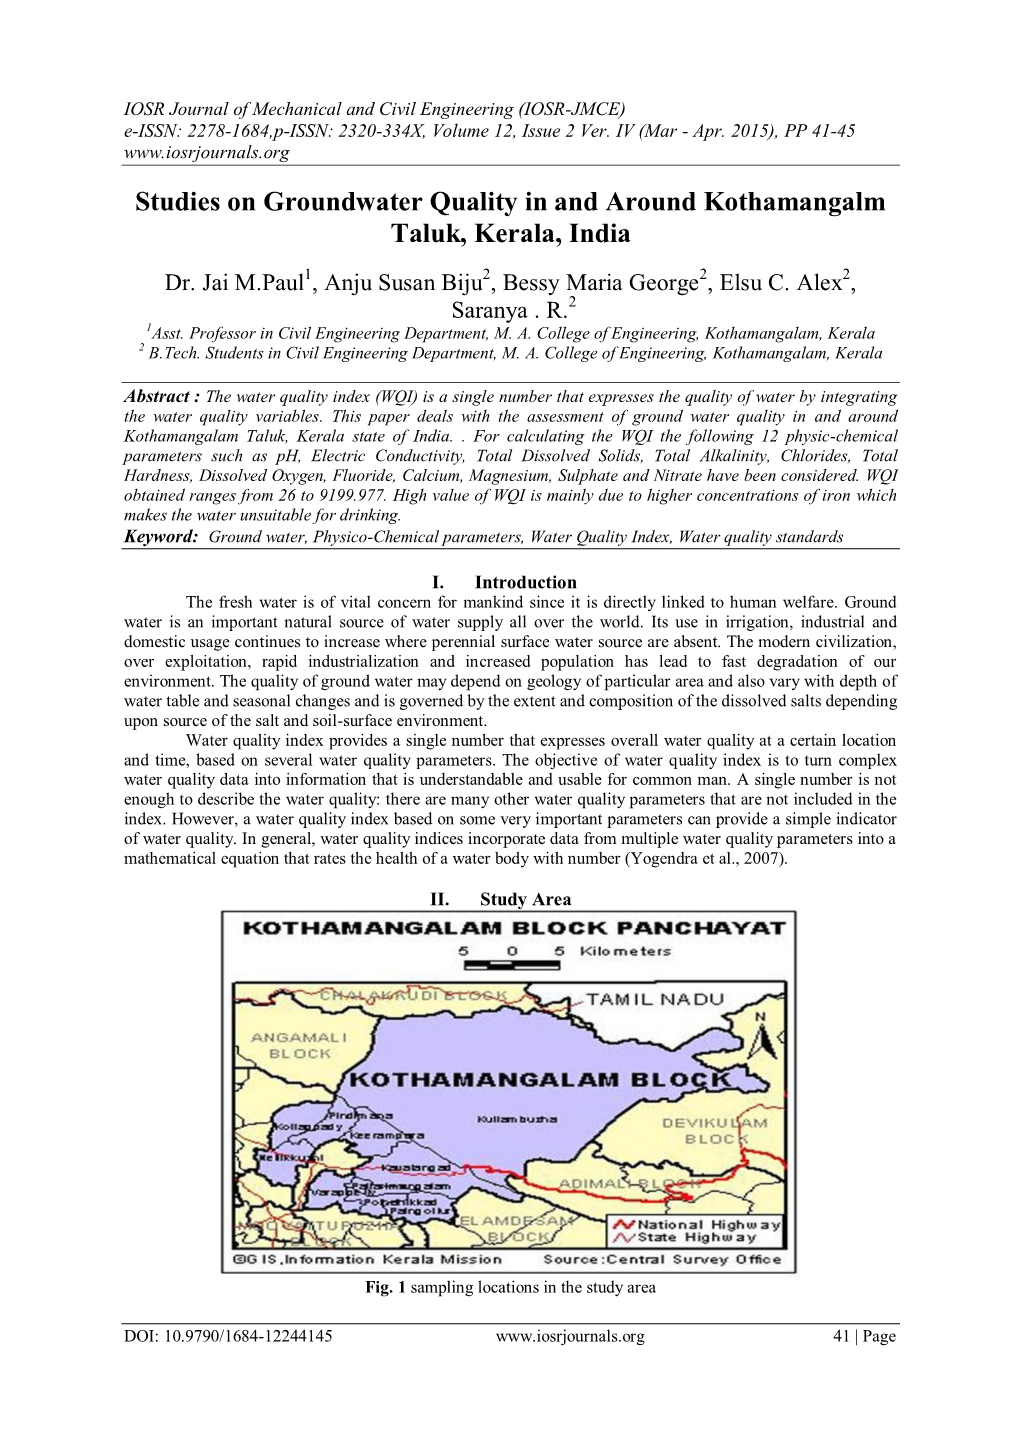 Studies on Groundwater Quality in and Around Kothamangalm Taluk, Kerala, India